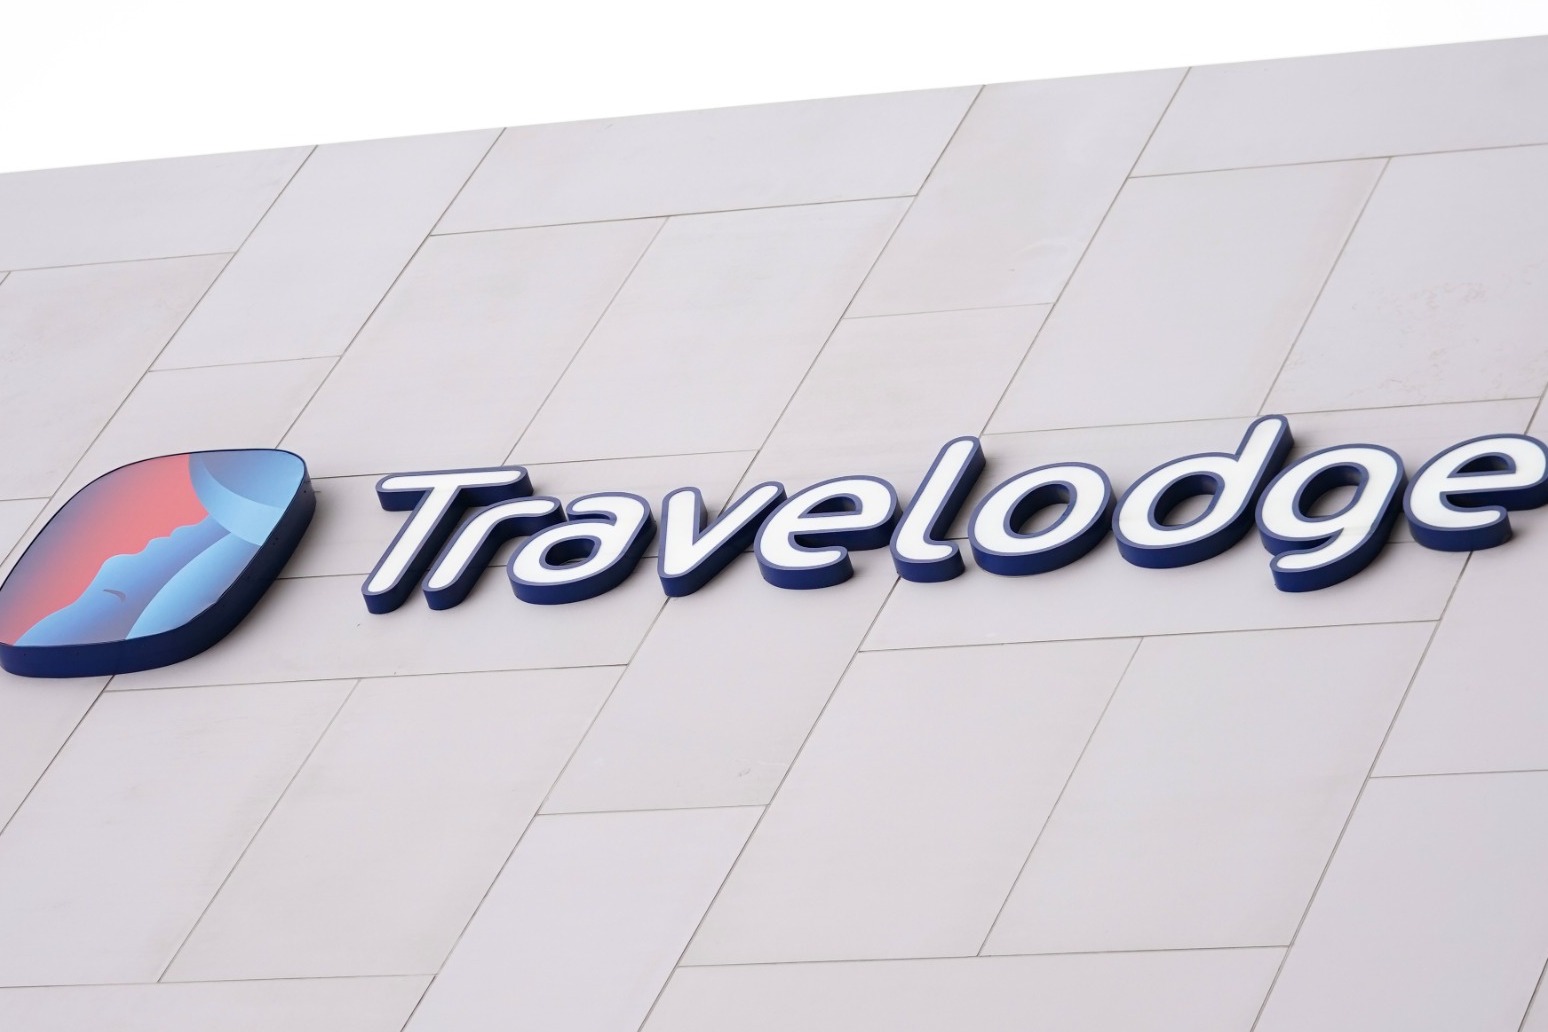 New design for Travelodge hotels revealed